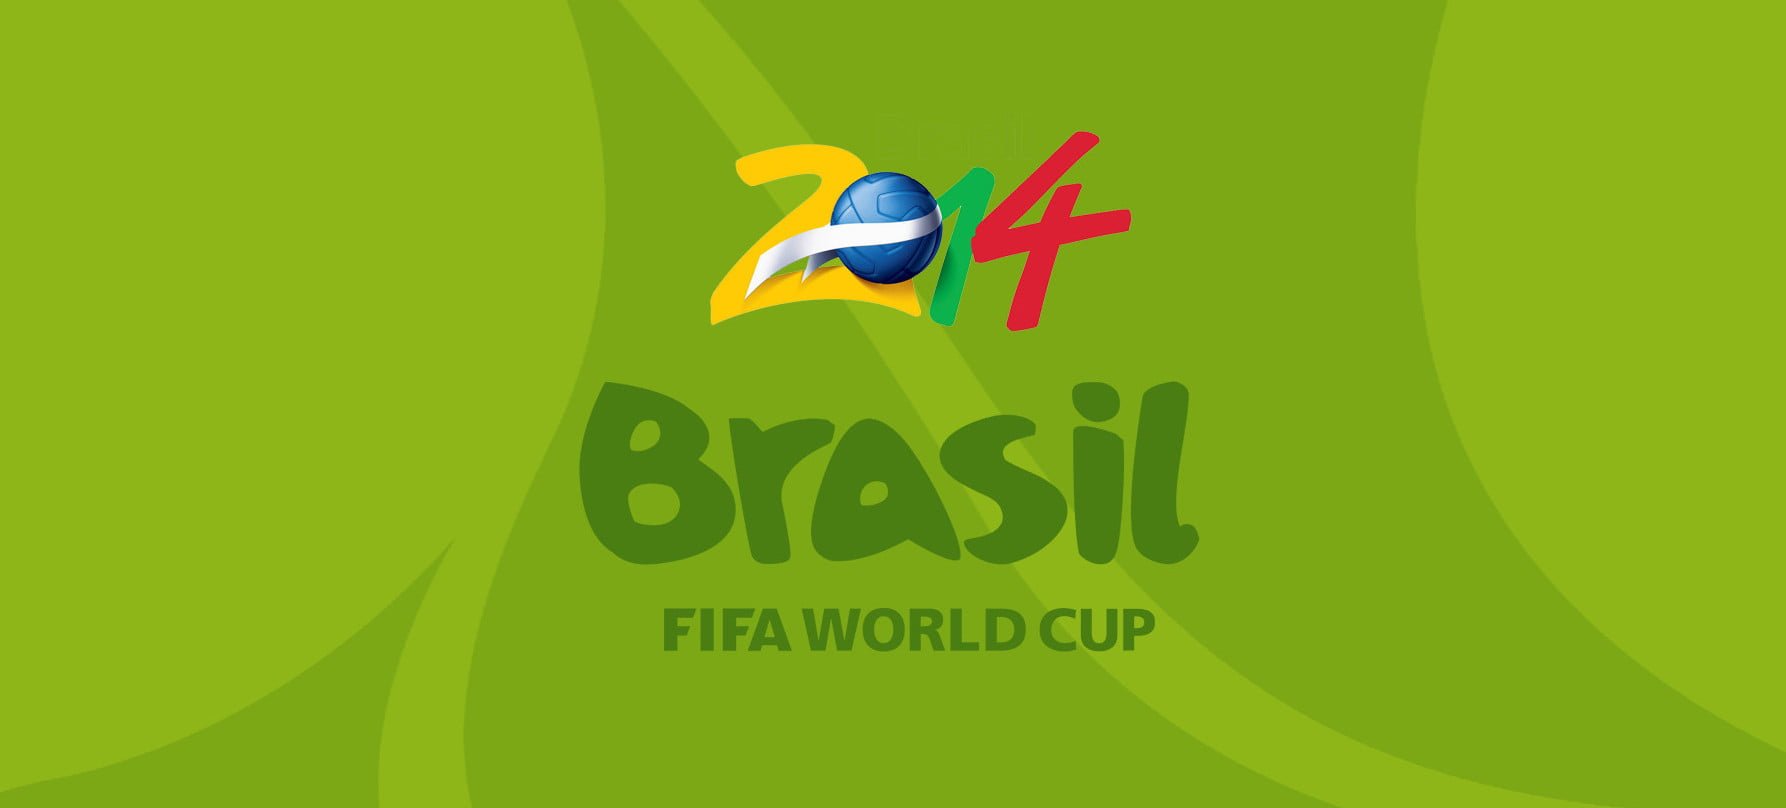 Agrega los 64 partidos de Brasil 2014 a tu calendario en 1 minuto